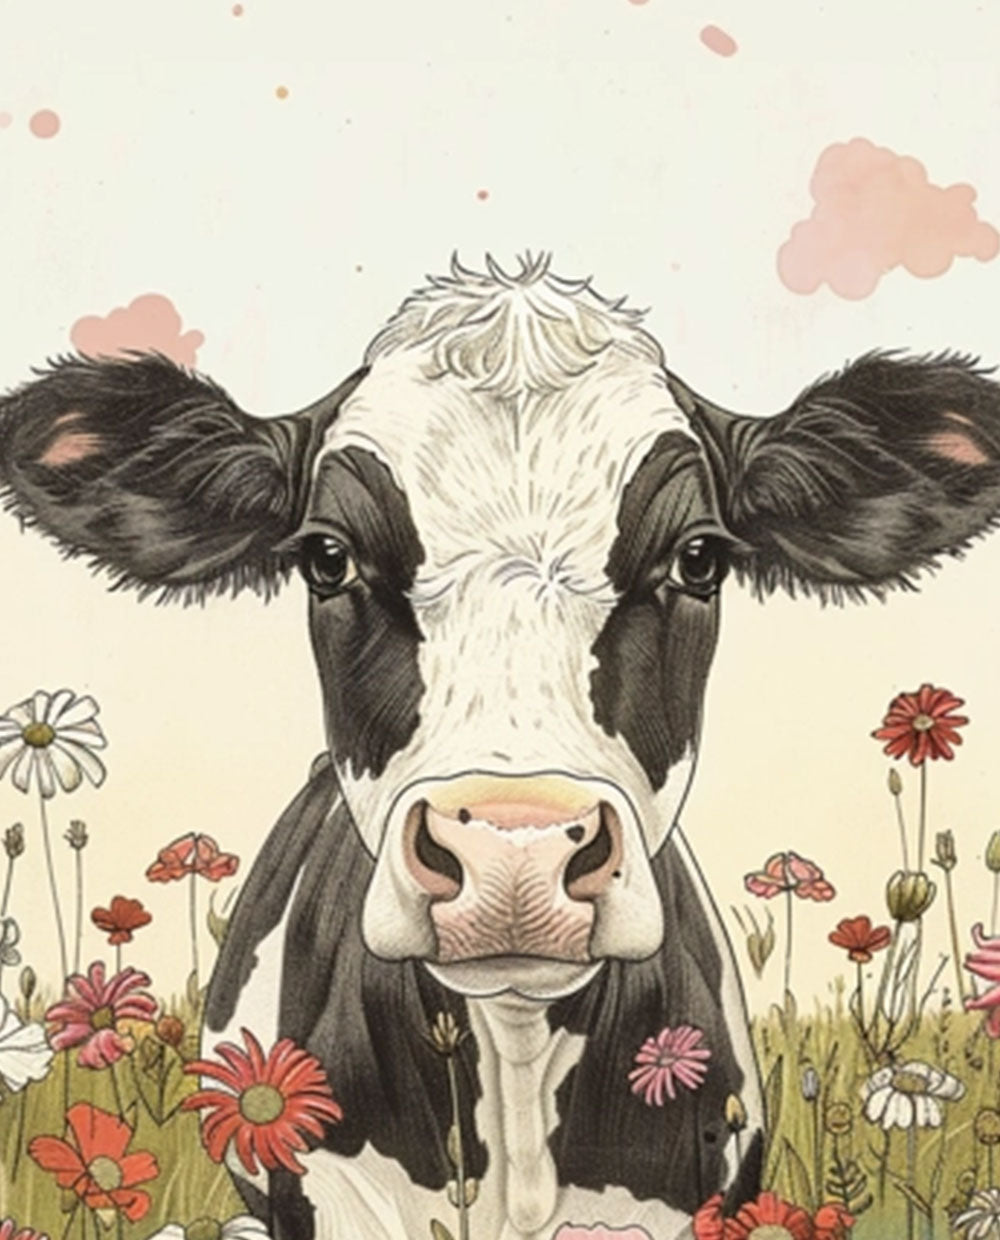 Cute cow illustration